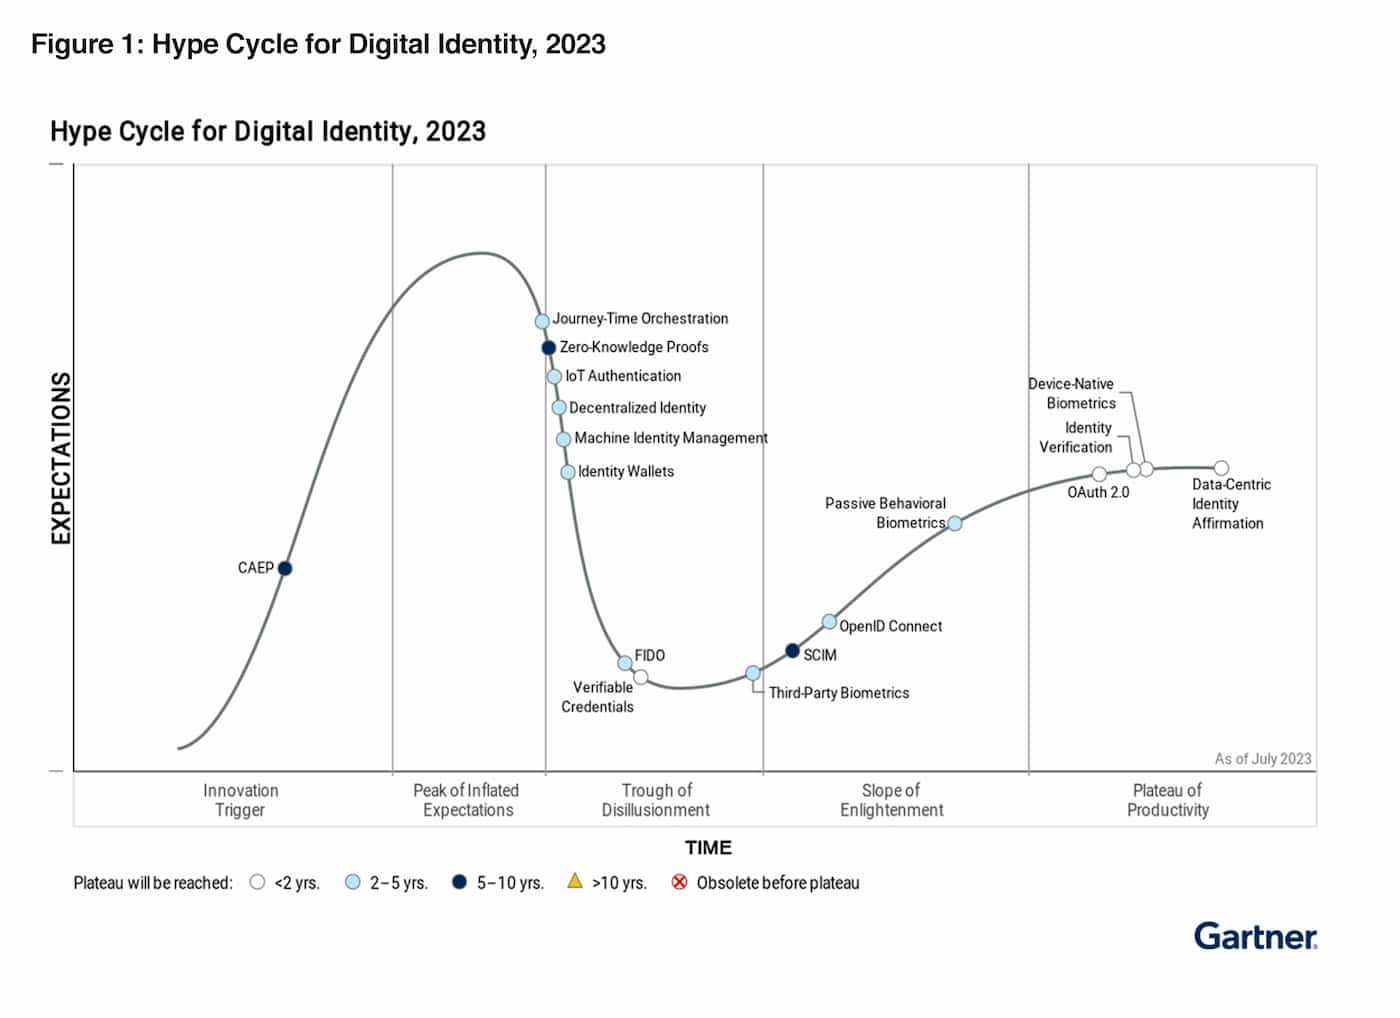 Gartner®️ Hype Cycle™ for Digital Identity 2023